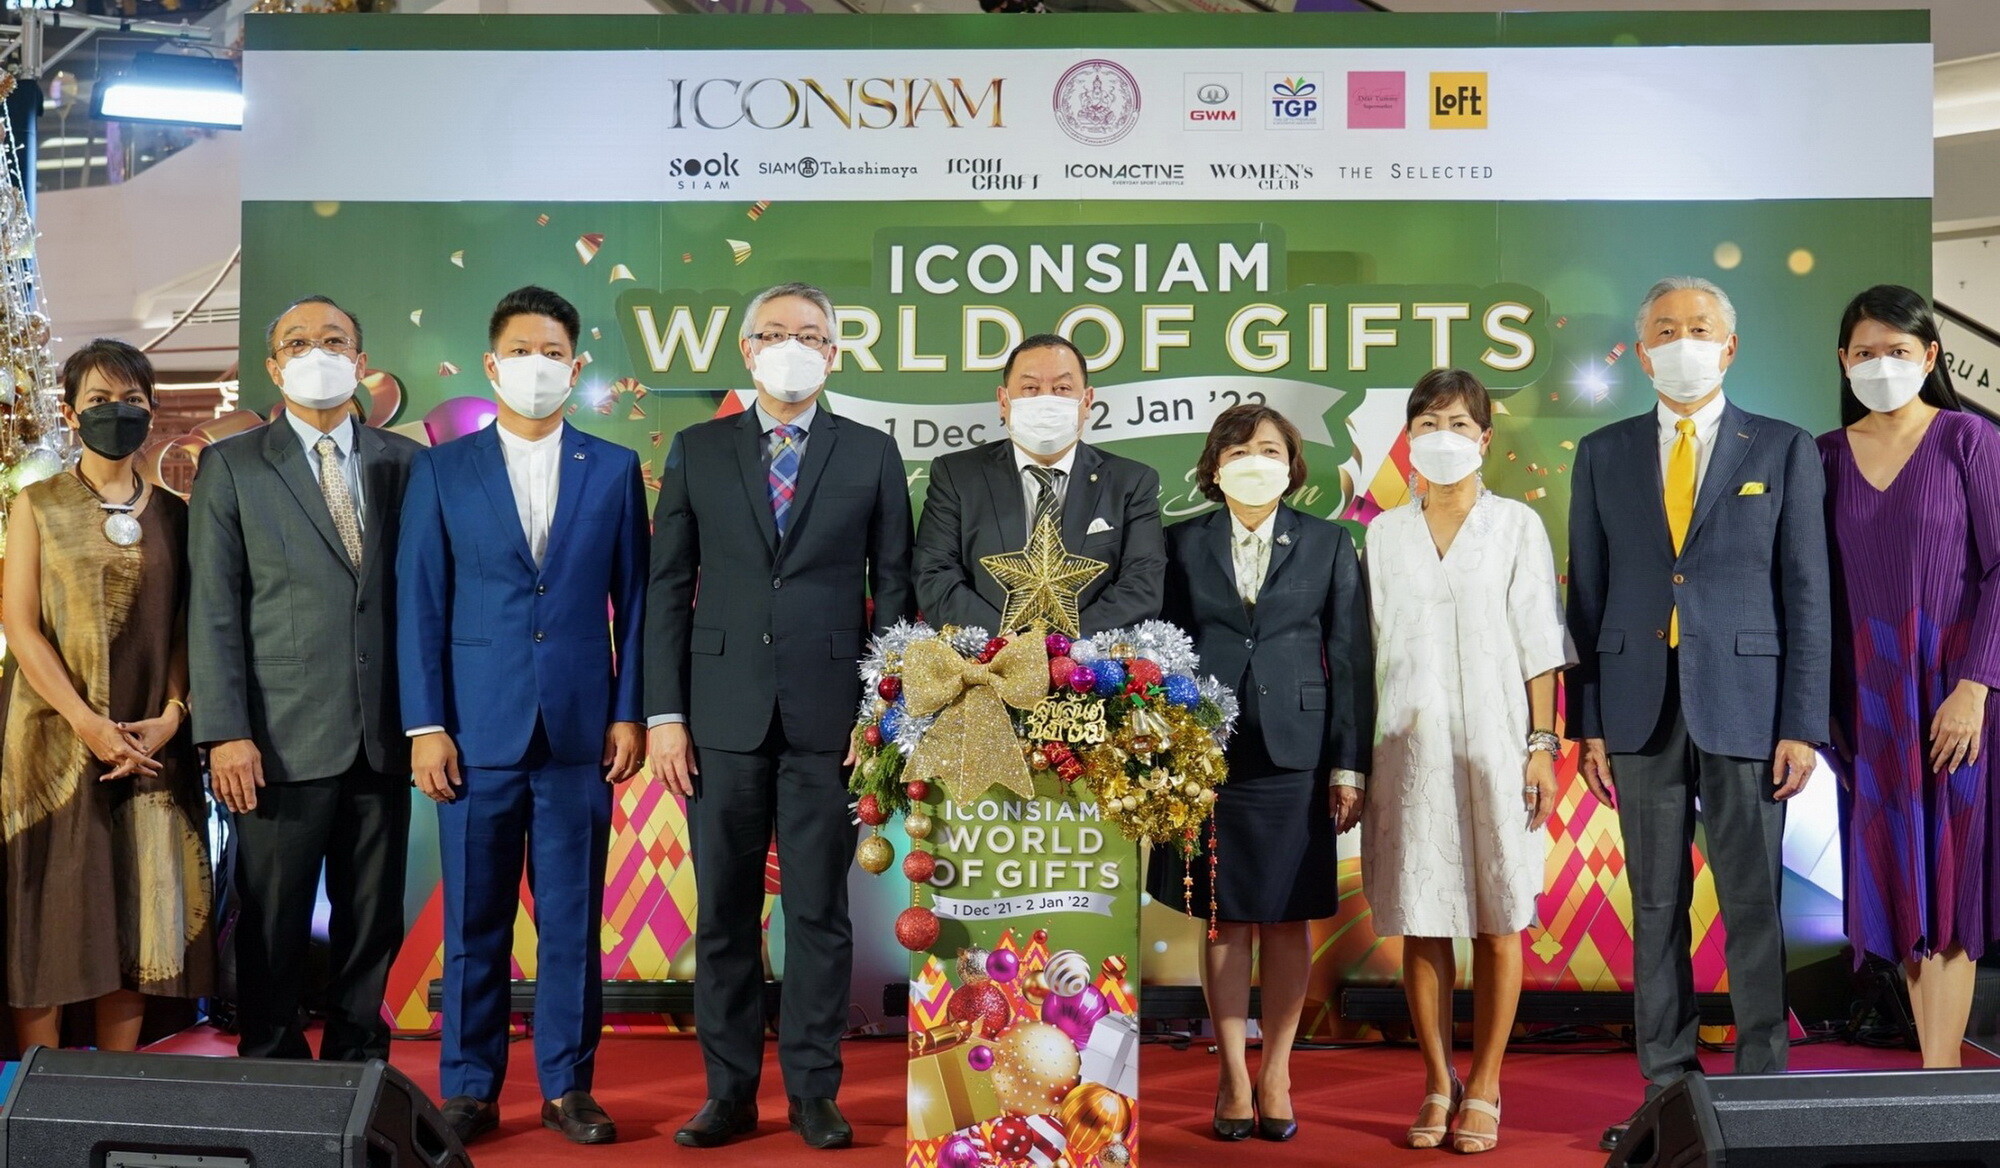 "ICONSIAM World of Gifts 2021" มหัศจรรย์เทศกาลของขวัญปีใหม่สุดยิ่งใหญ่แห่งปี ละลานตาไปกับอาณาจักรของขวัญจากทั่วทุกมุมโลก  วันนี้ - 2 มกราคม 2565 ณ ไอคอนสยาม